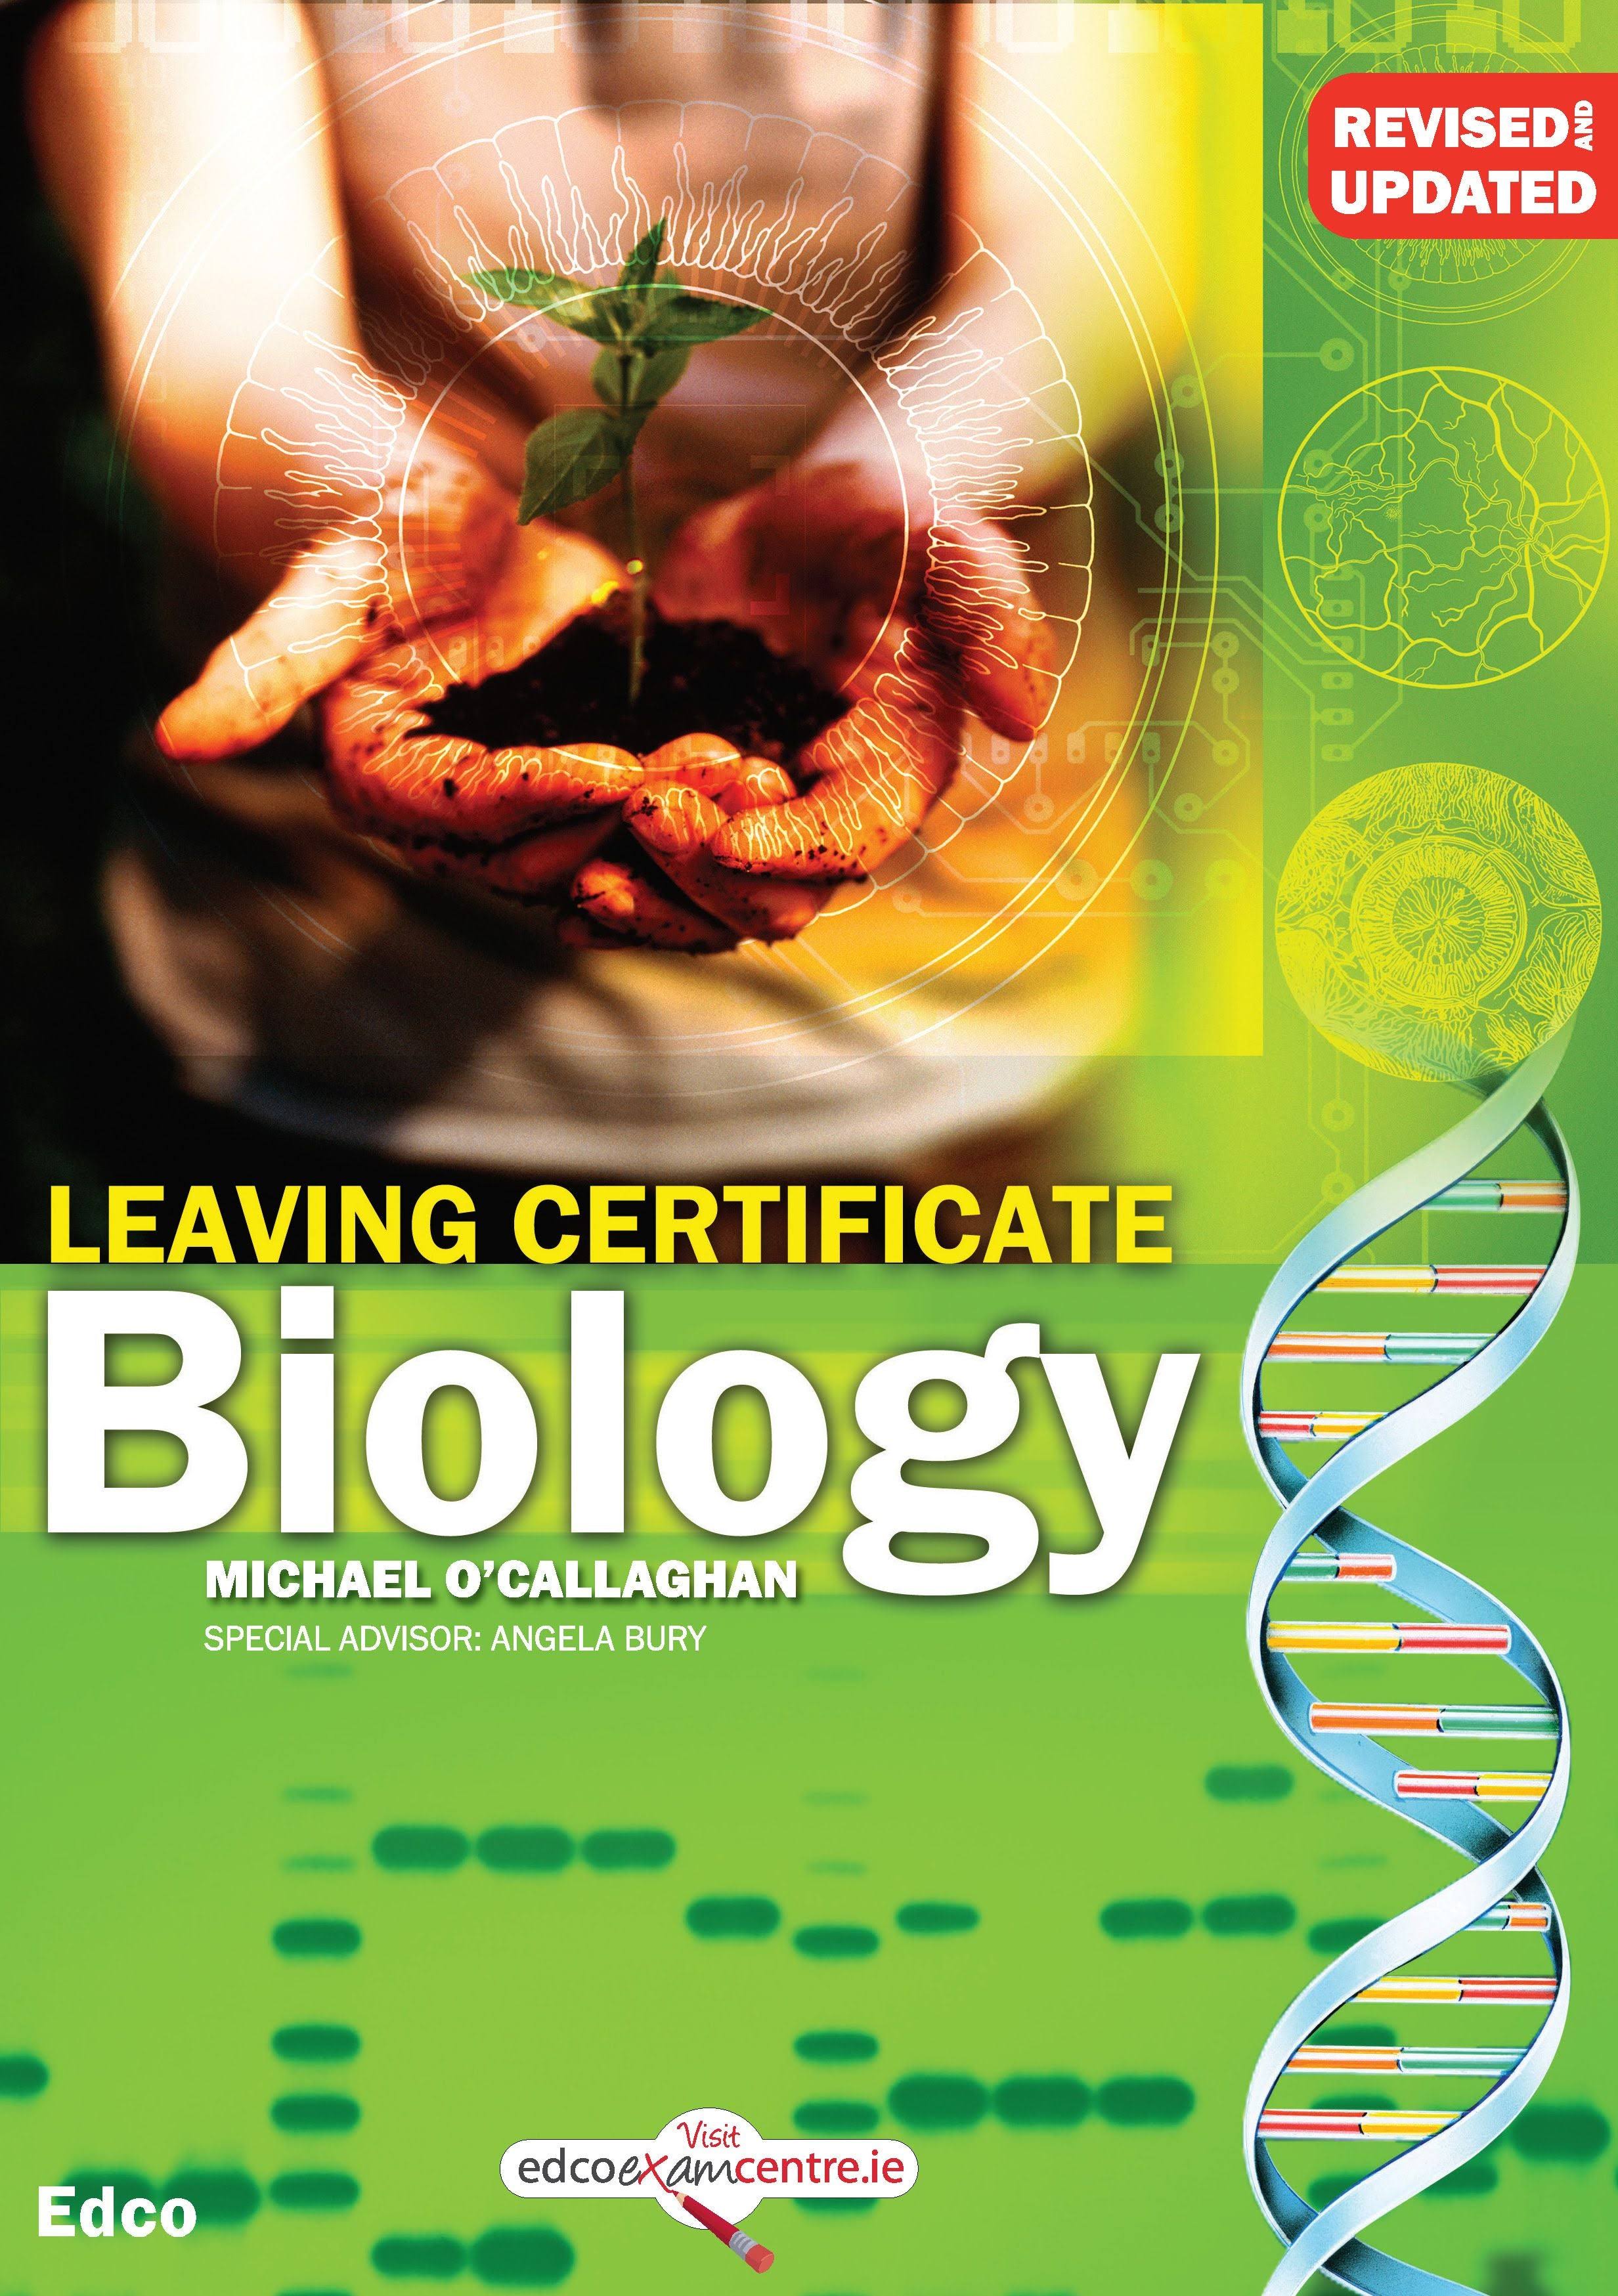 Leaving Certificate Biology - Michael O'Callaghan